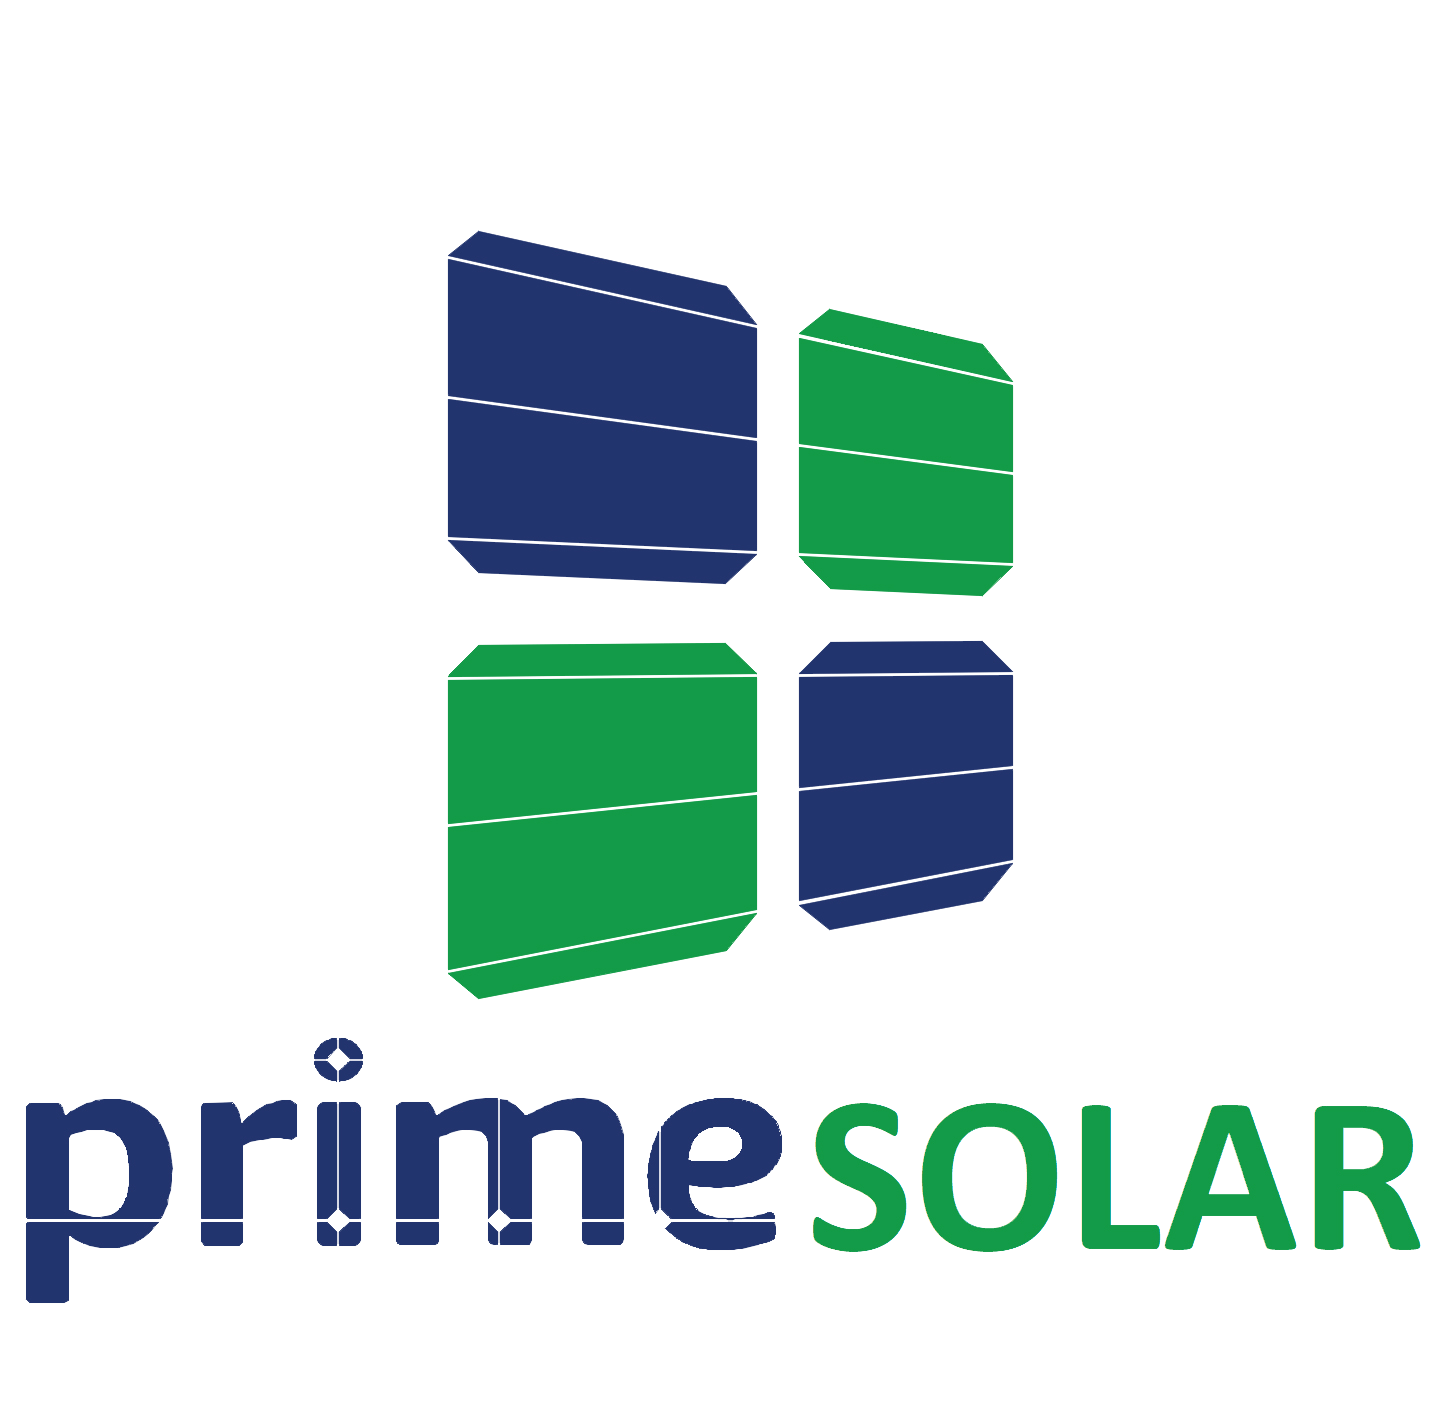 Prime Solar Solutions